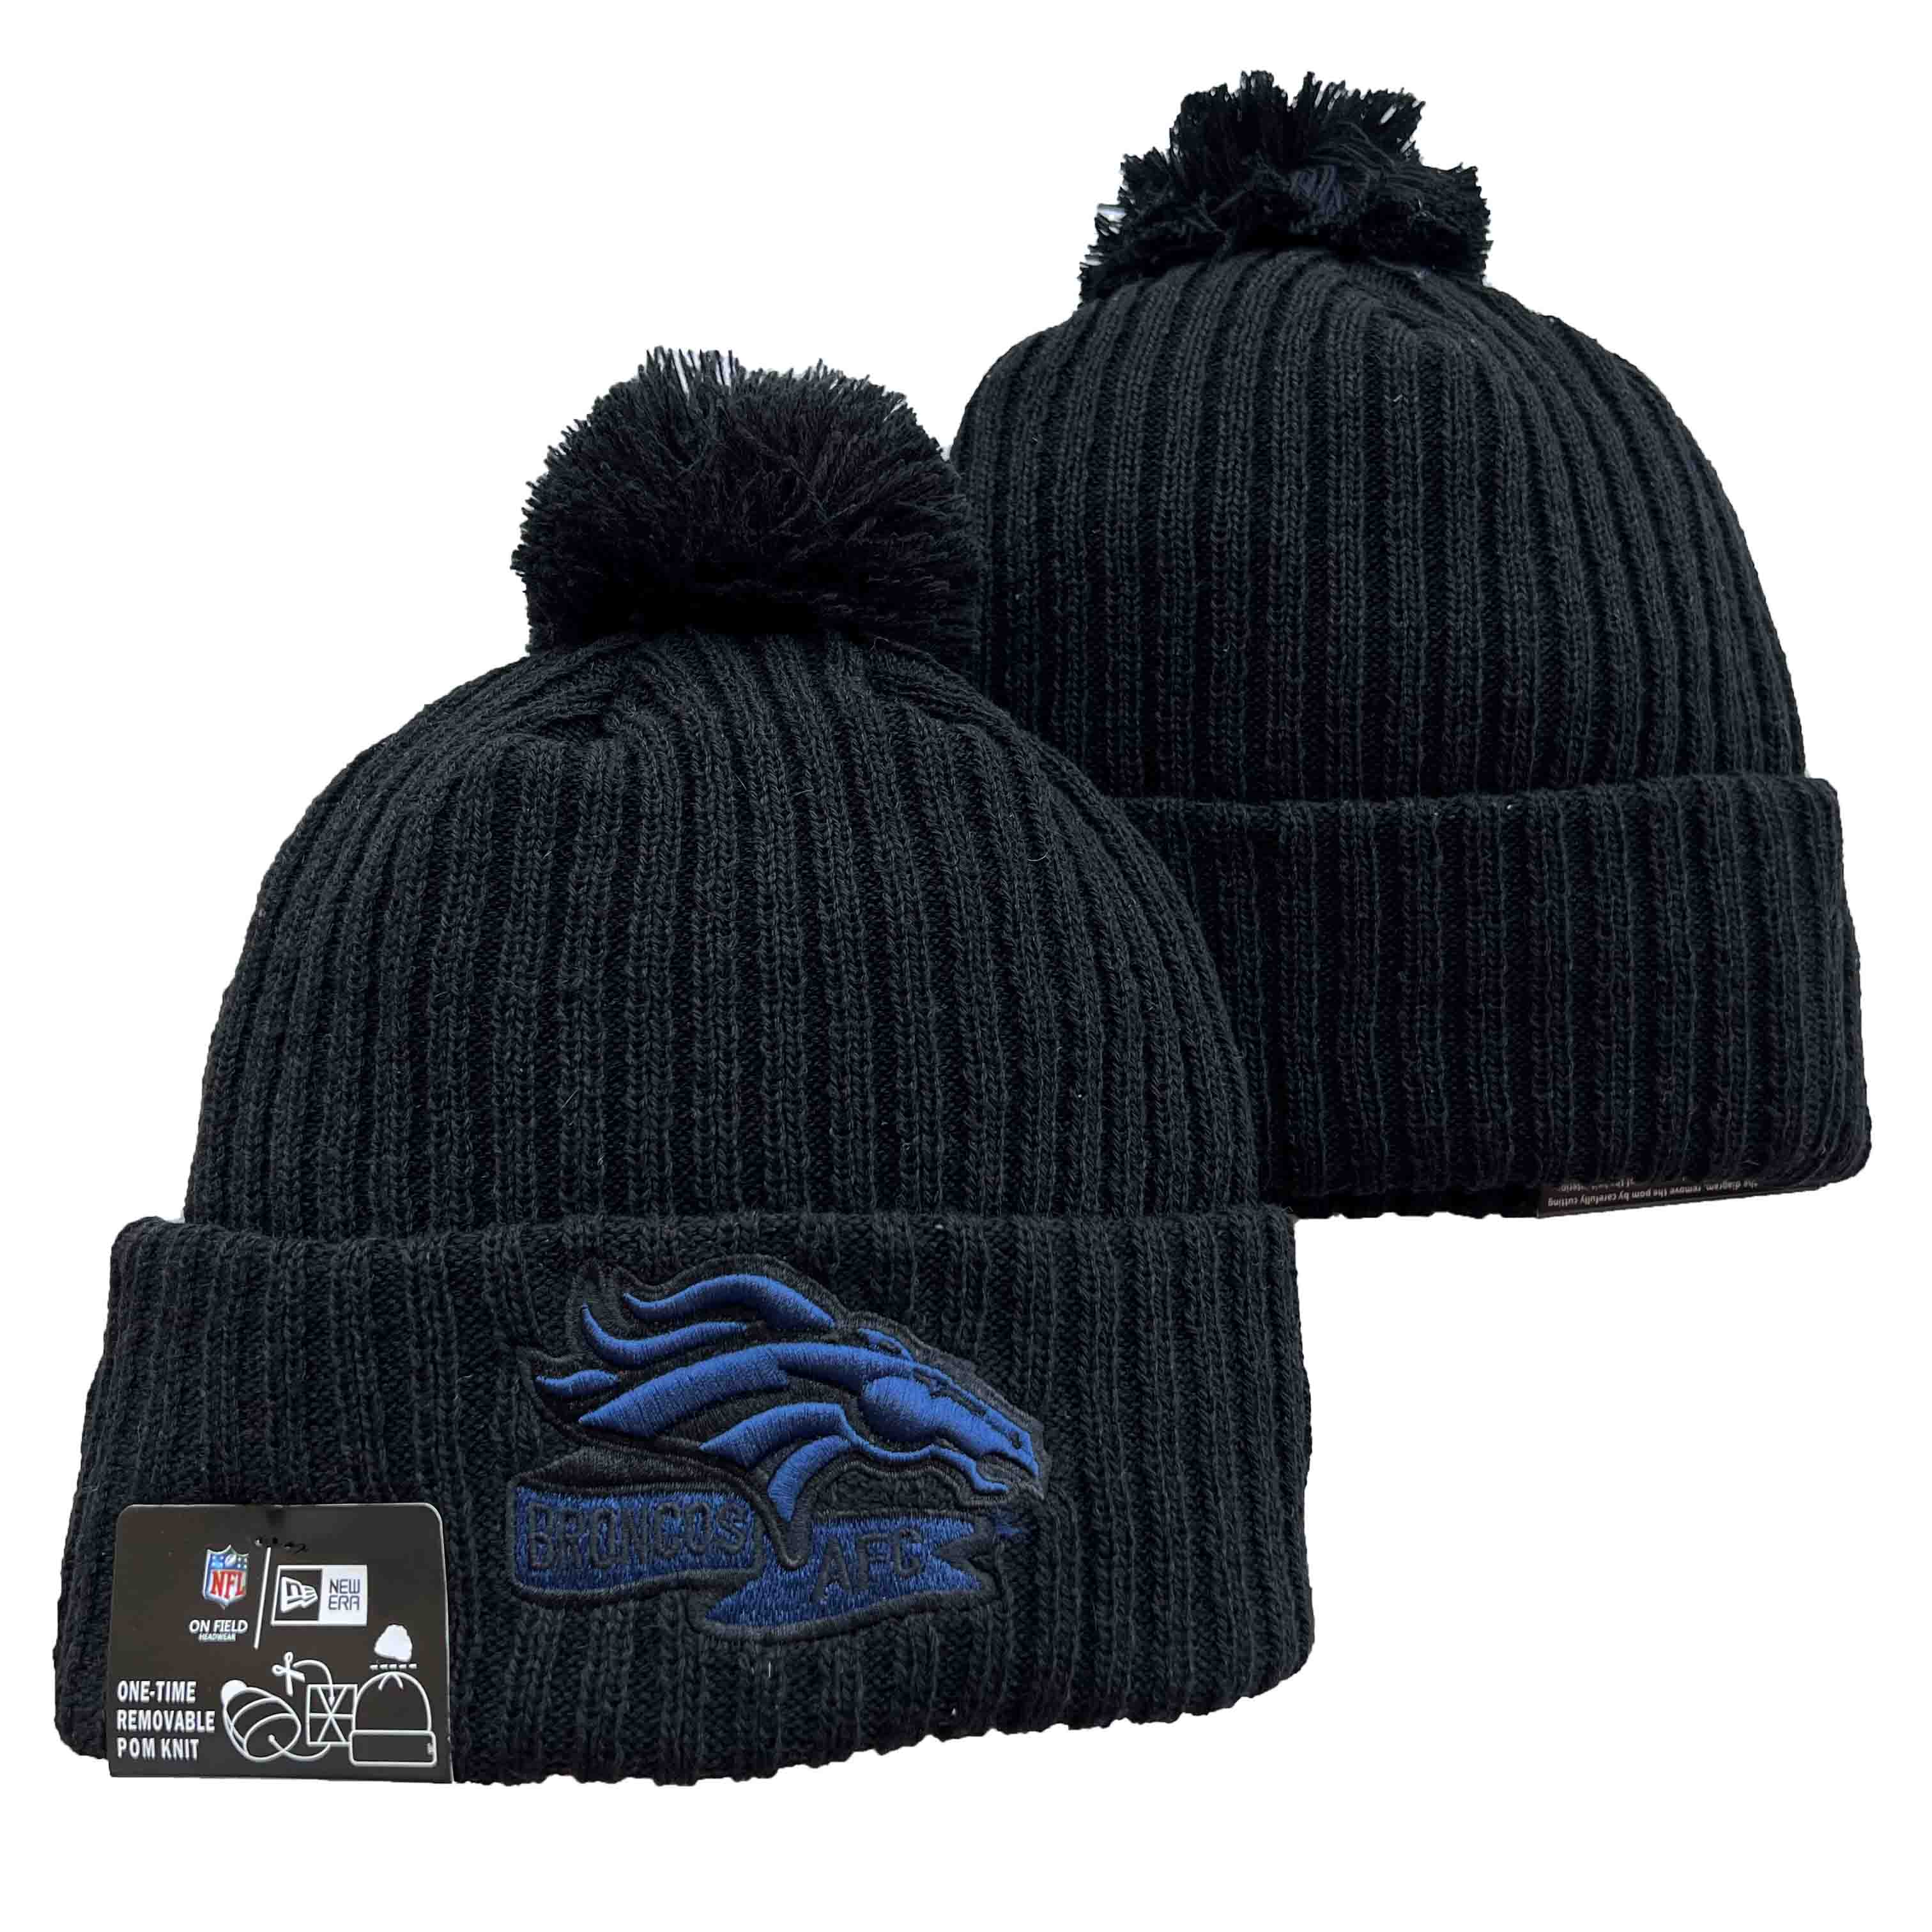 NFL Denver Broncos Beanies Knit Hats-YD932